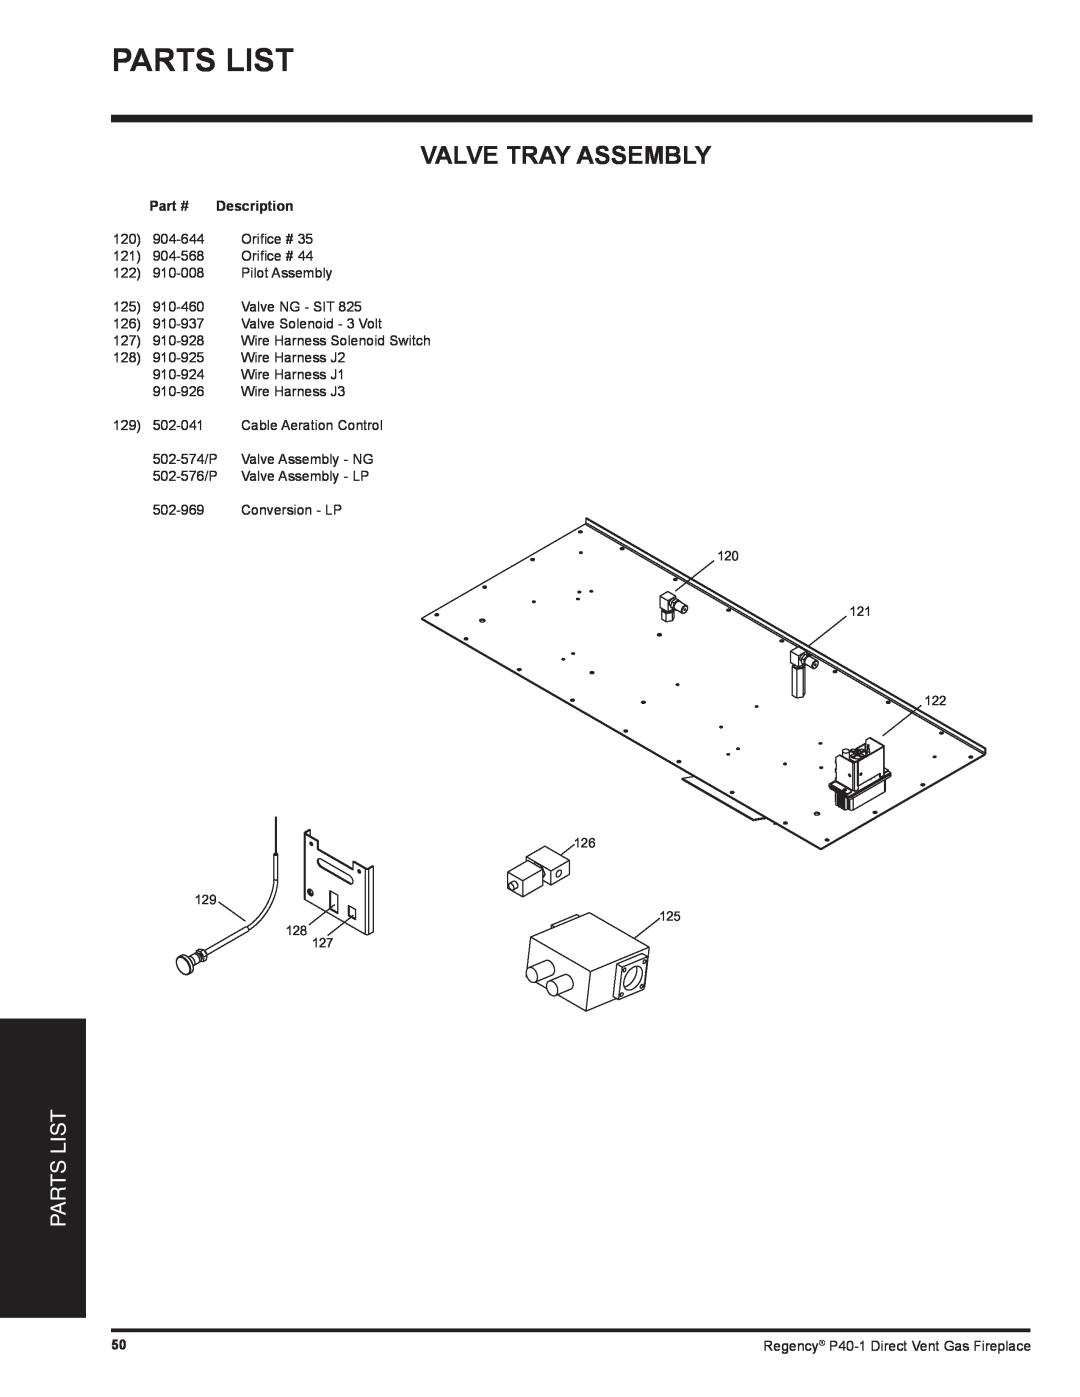 Regency P40-NG1, P40-LP1 installation manual Parts List, Valve Tray Assembly, Part #, Description 